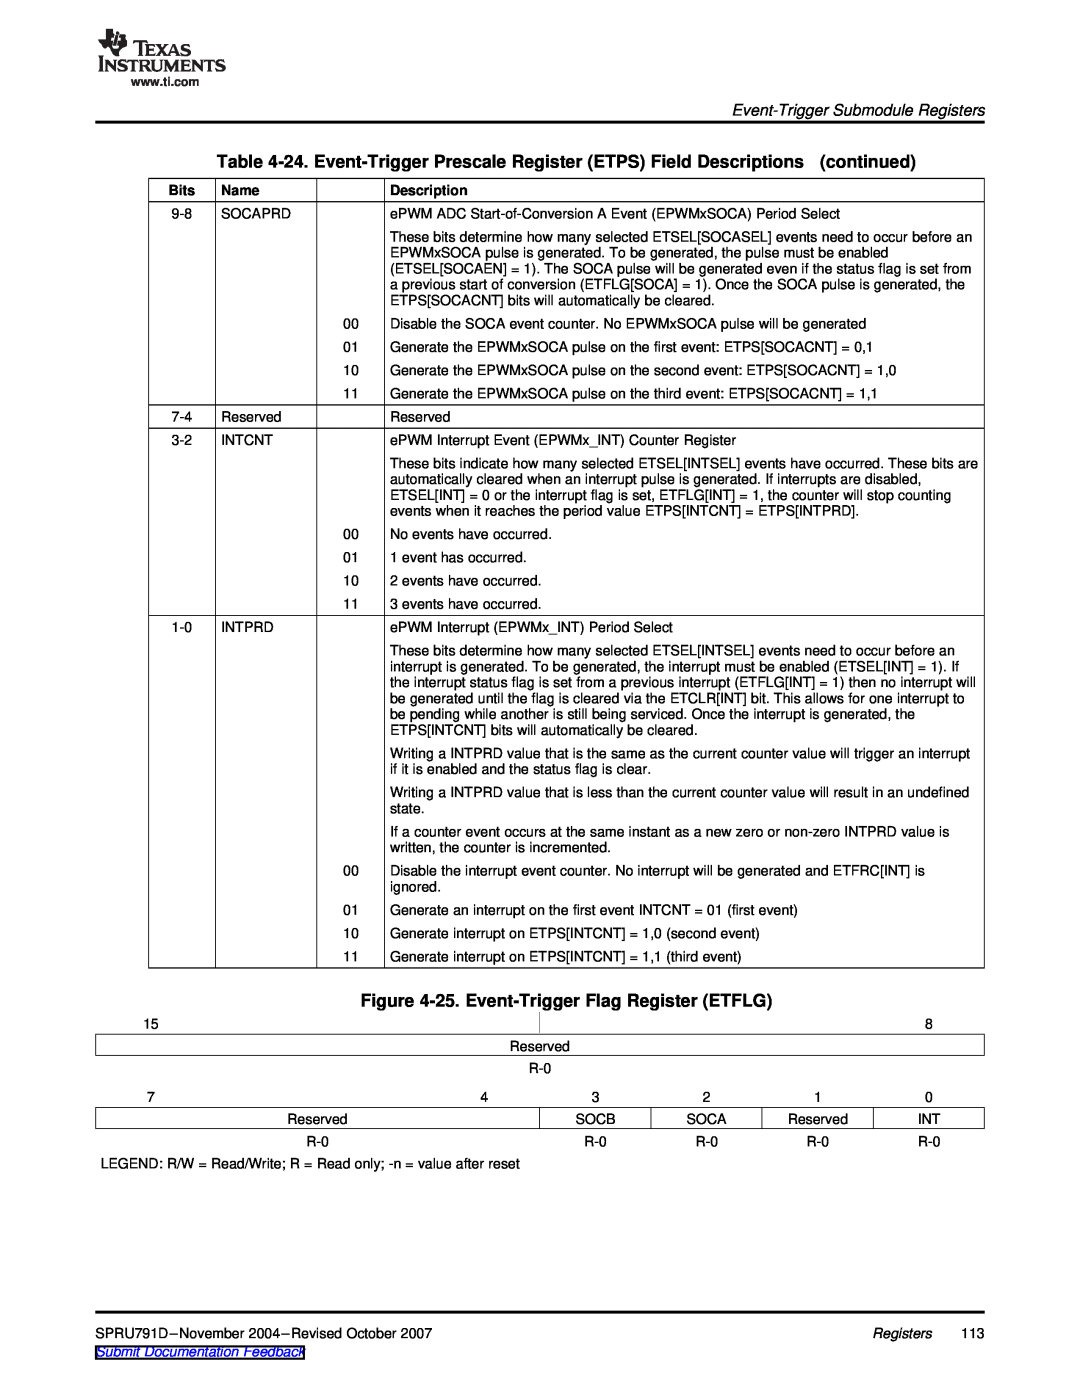 Texas Instruments 28xxx 25. Event-Trigger Flag Register ETFLG, Name, Description, Submit Documentation Feedback, Bits 